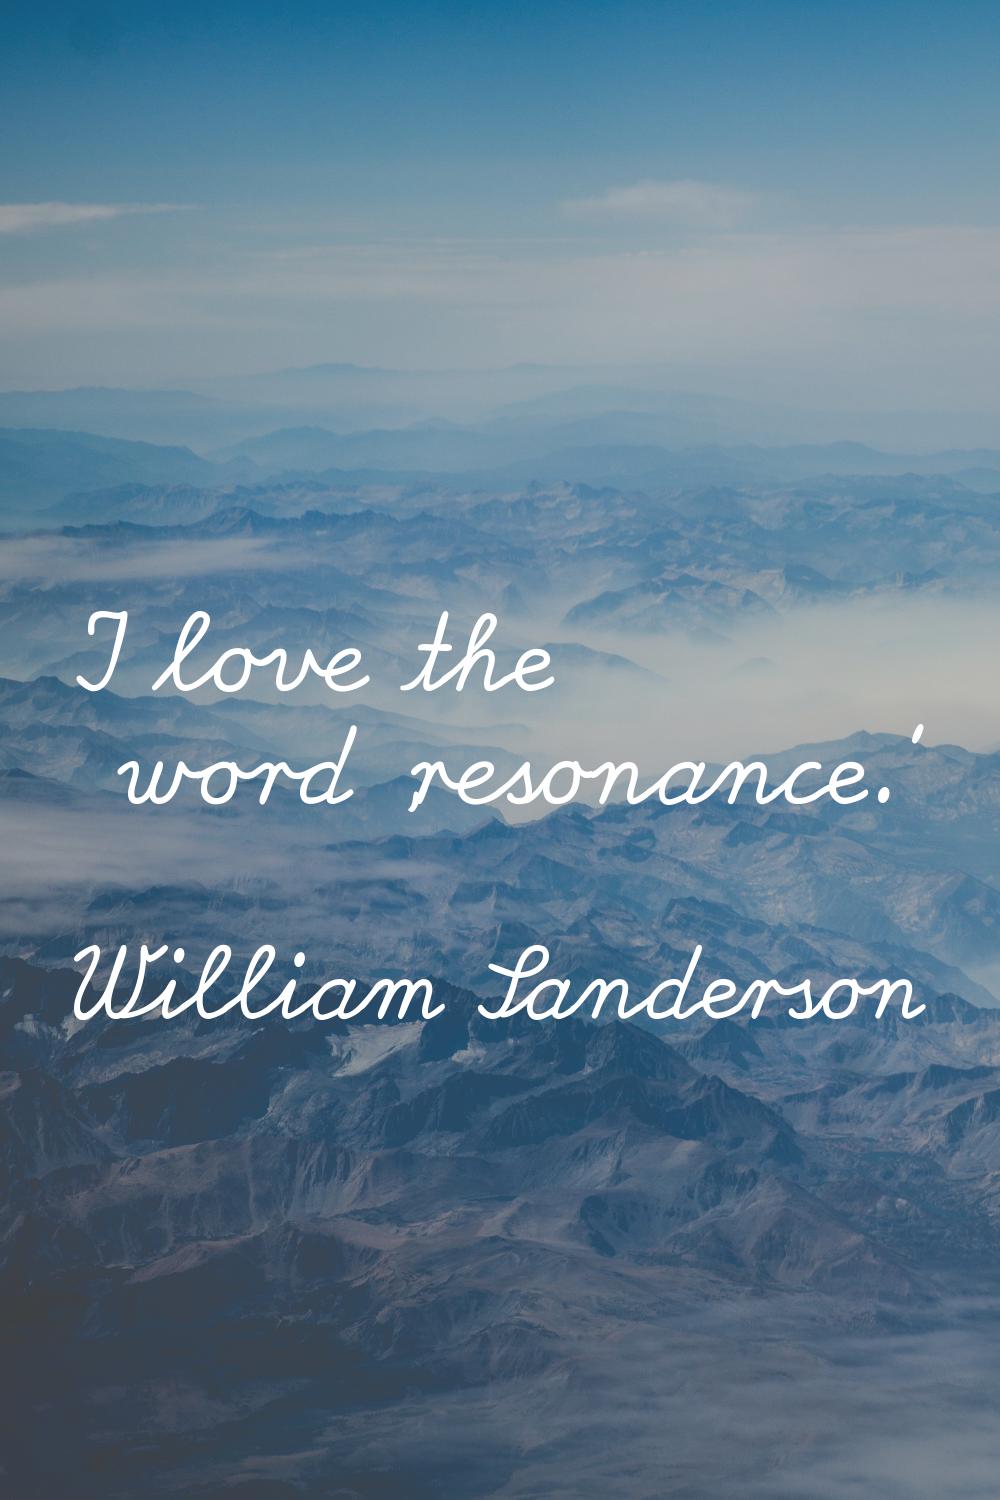 I love the word 'resonance.'